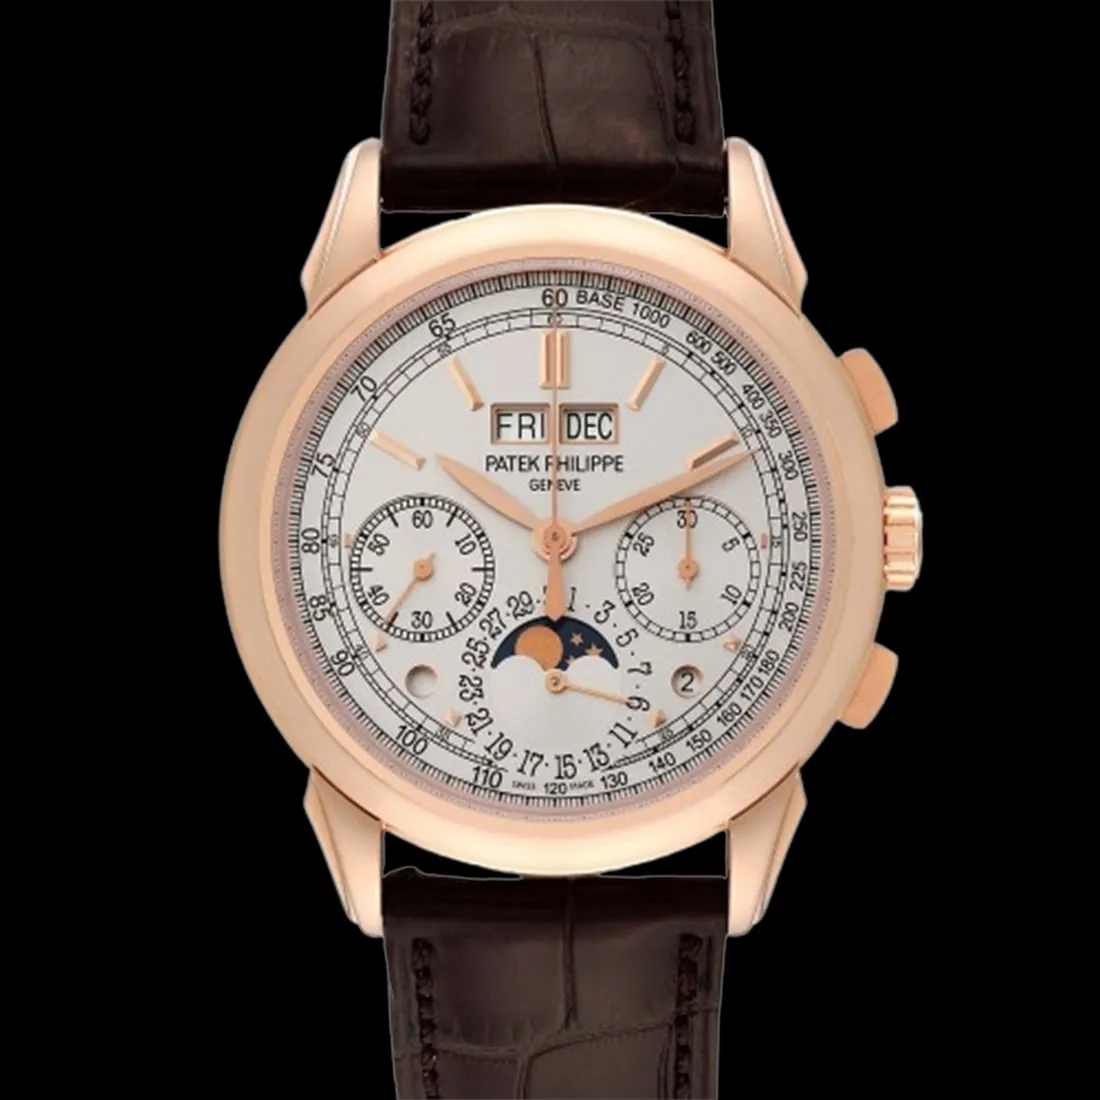 Patek Philippe Perpetual Calendar Watch is estimated at $250,000 - $275,000.
